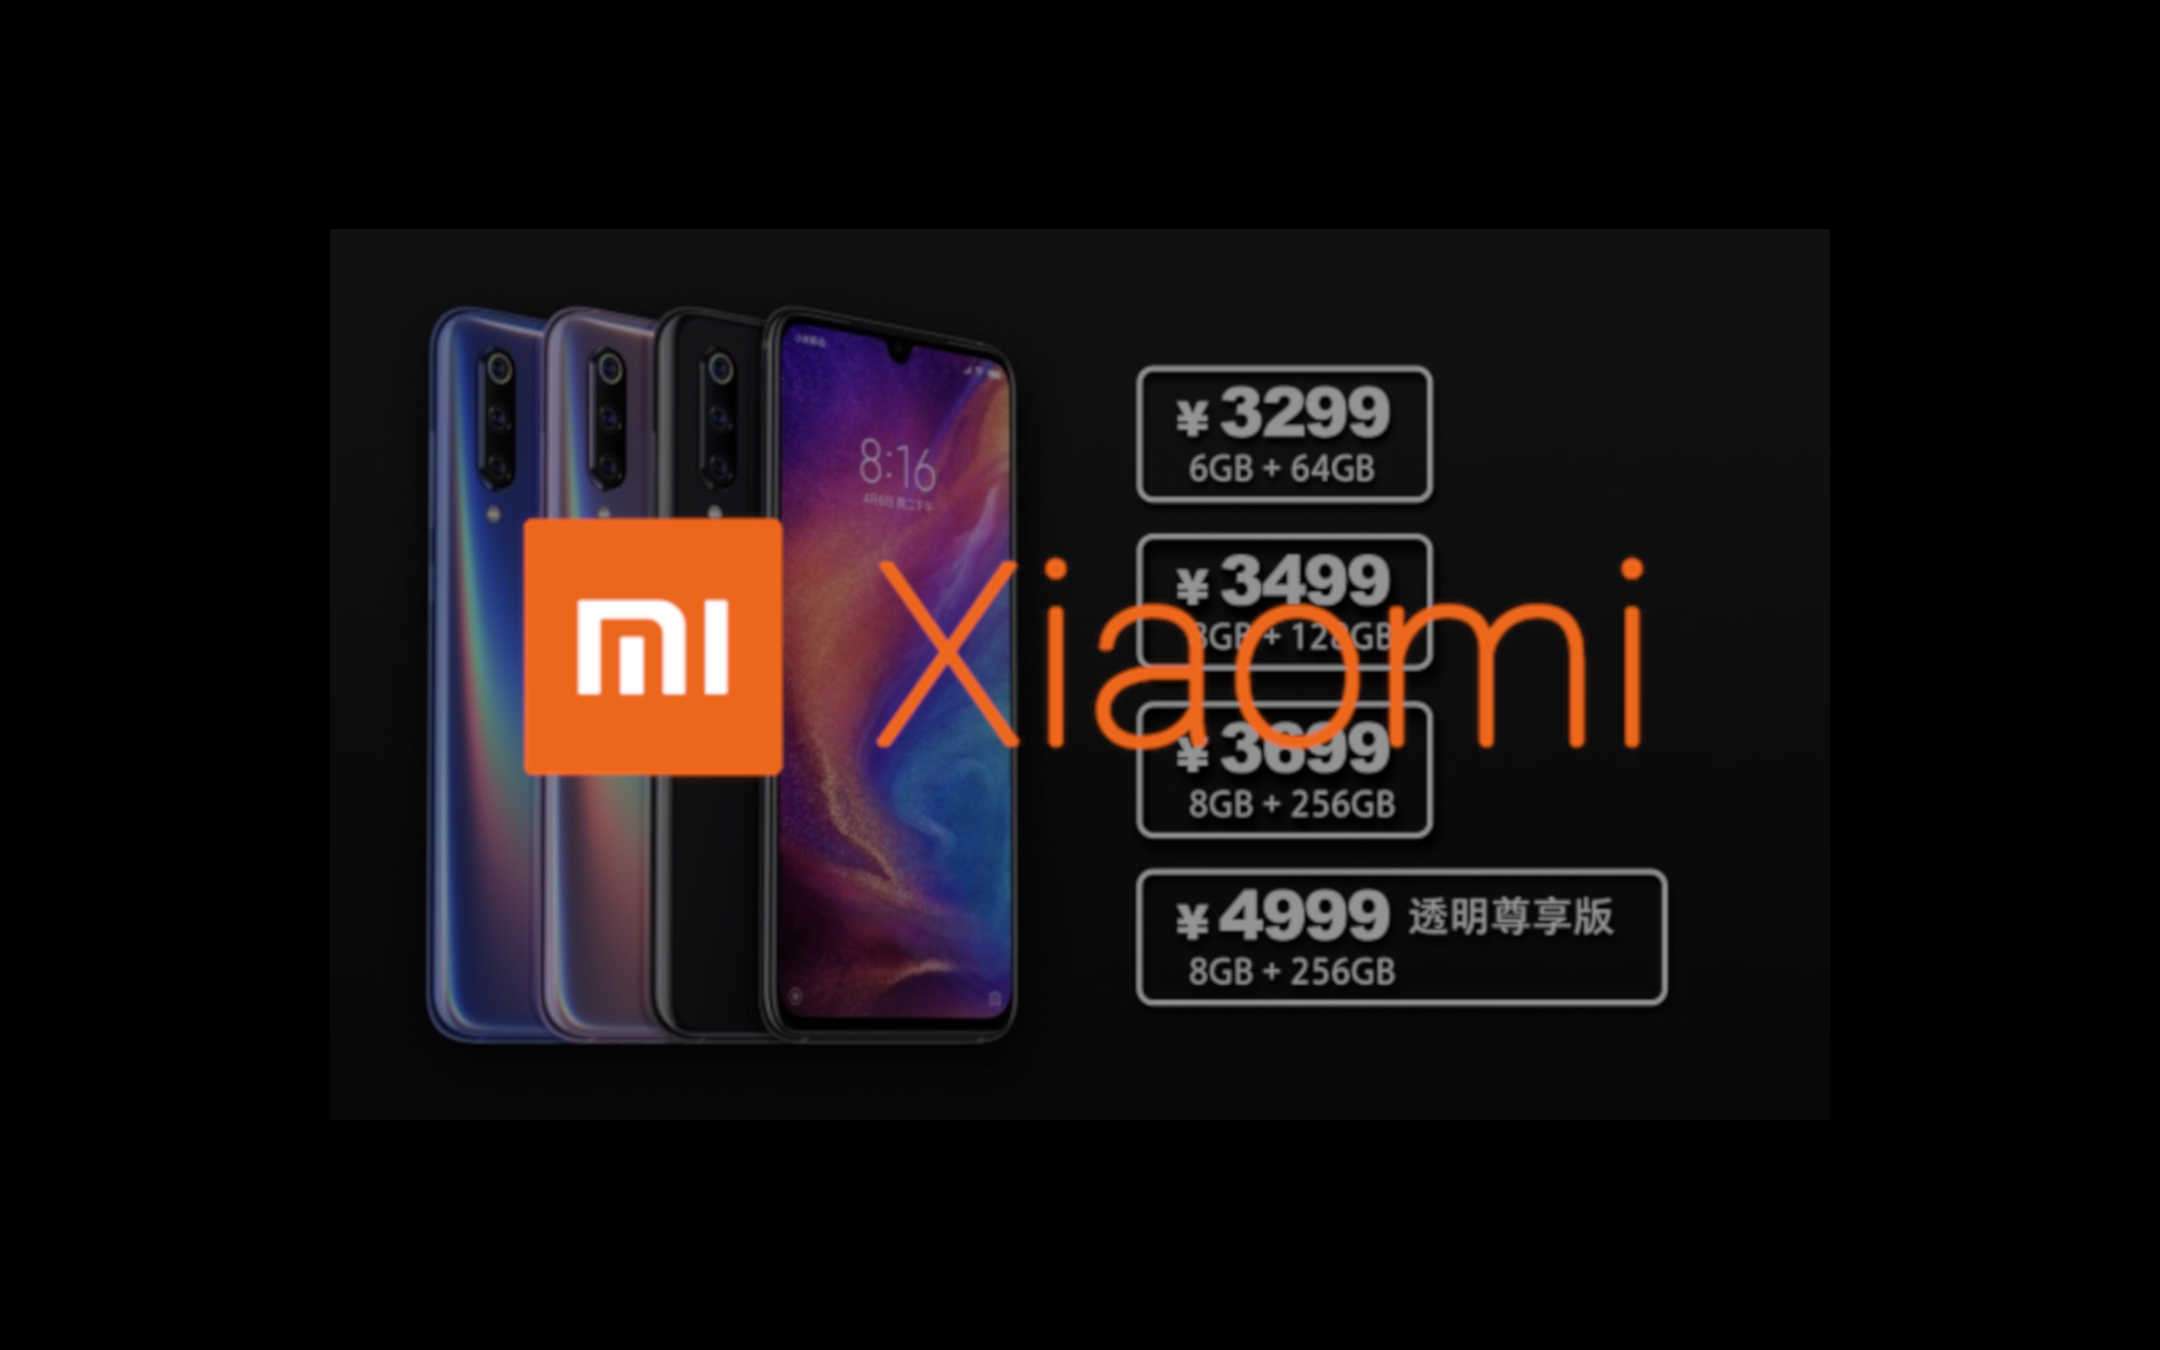 Xiaomi Mi 9 e Mi 9 Explorer: spuntano i prezzi